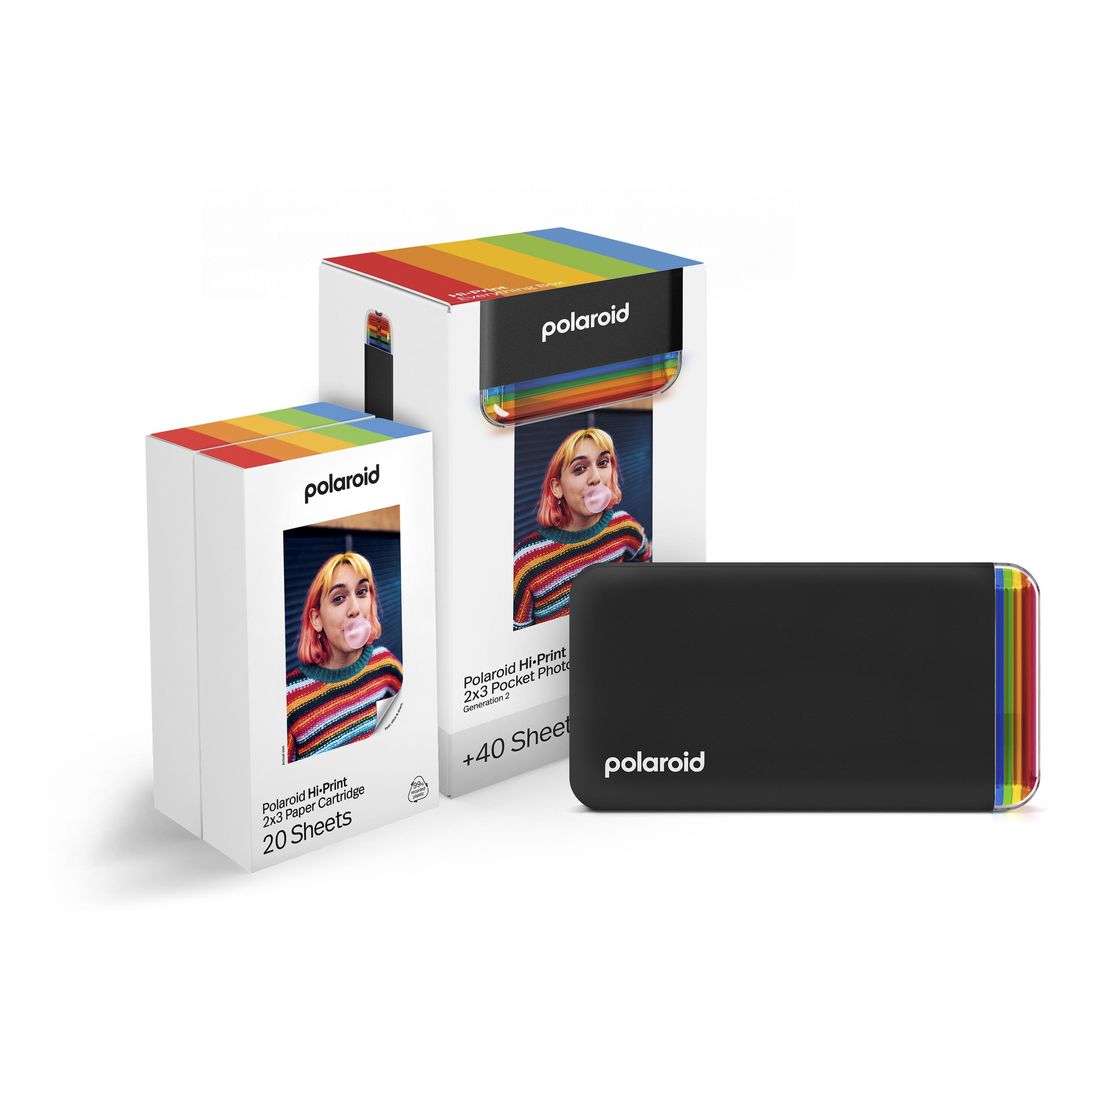 Polaroid HiPrint (Gen 2) 2x3 Pocket Photo Printer - Everything Box - Black